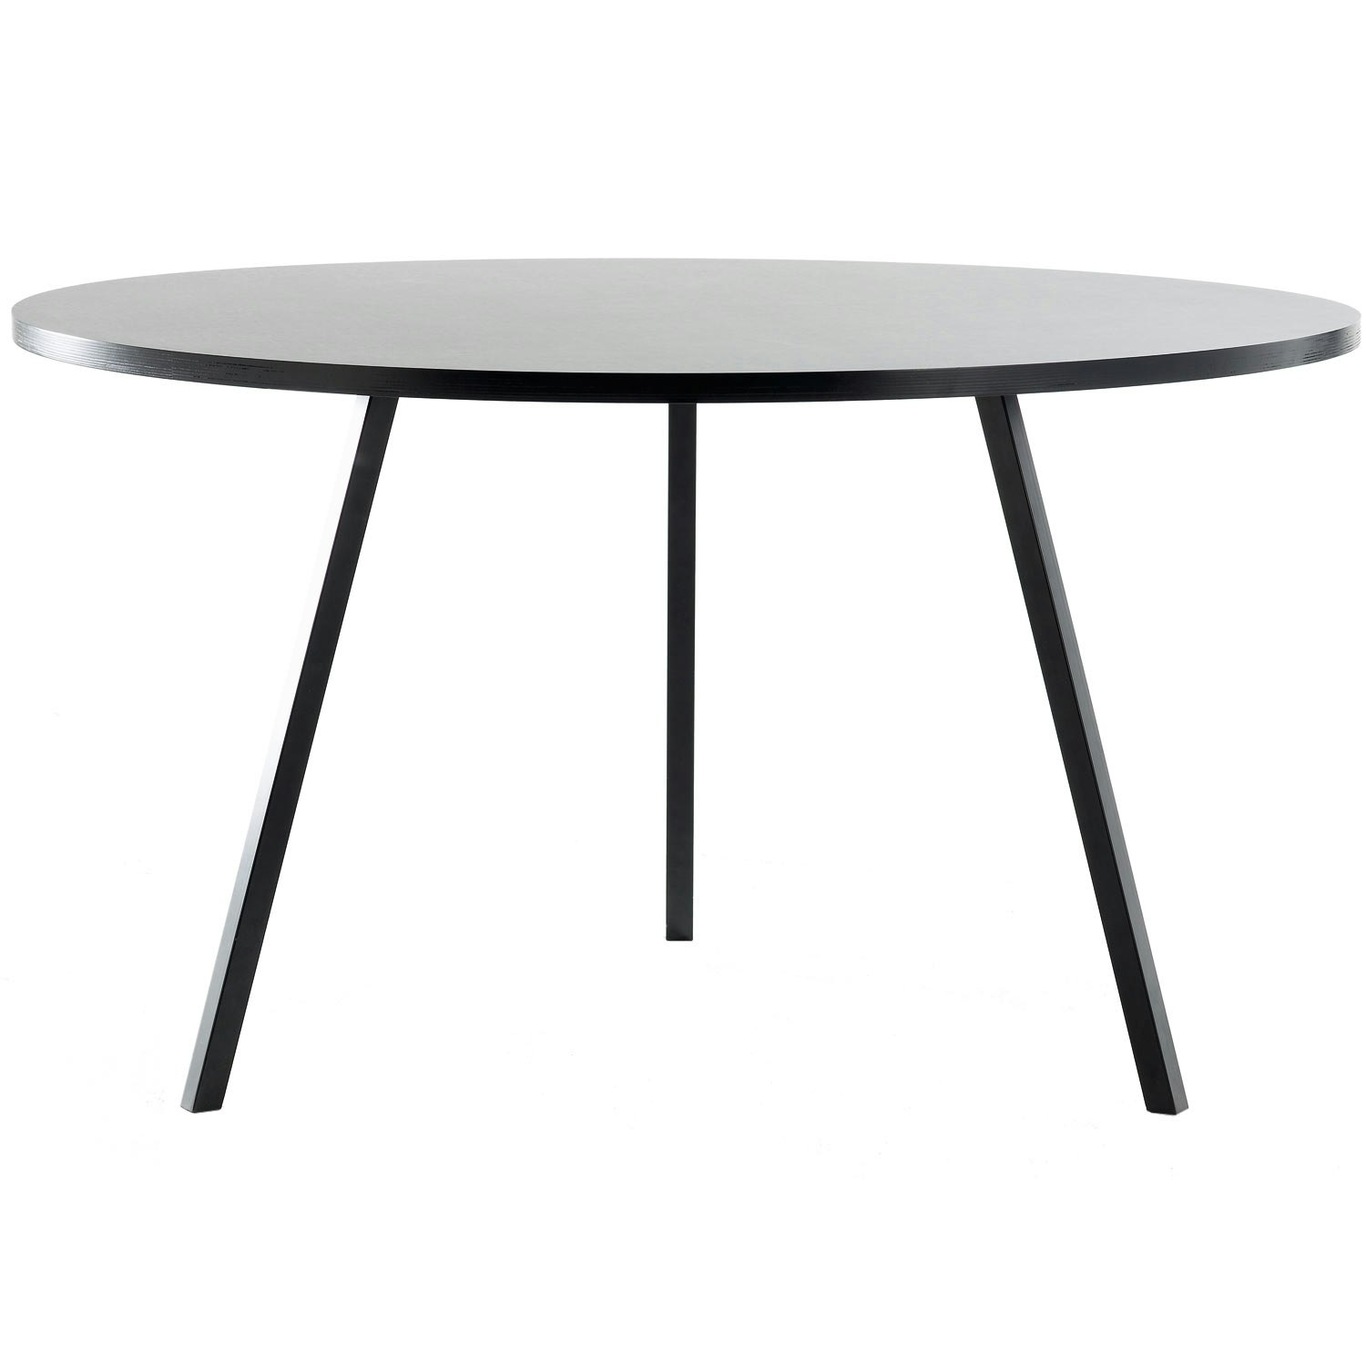 Loop Stand Round Table 120 cm, black